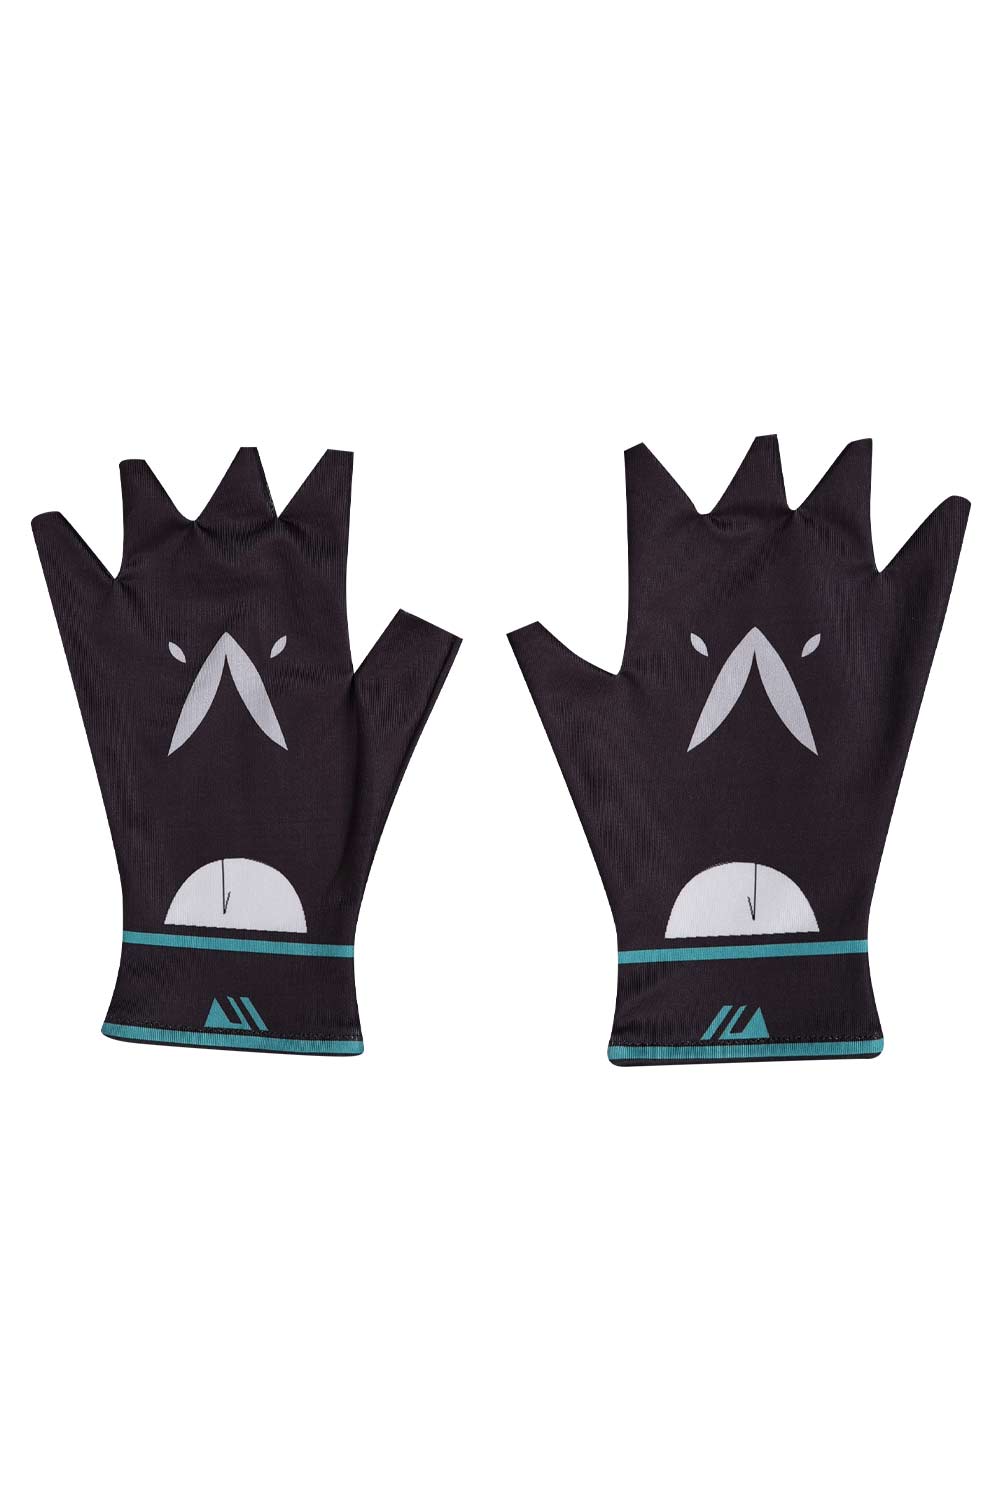 Game VALORANT Jett Cosplay Printed Gloves Halloween Costume Accessories